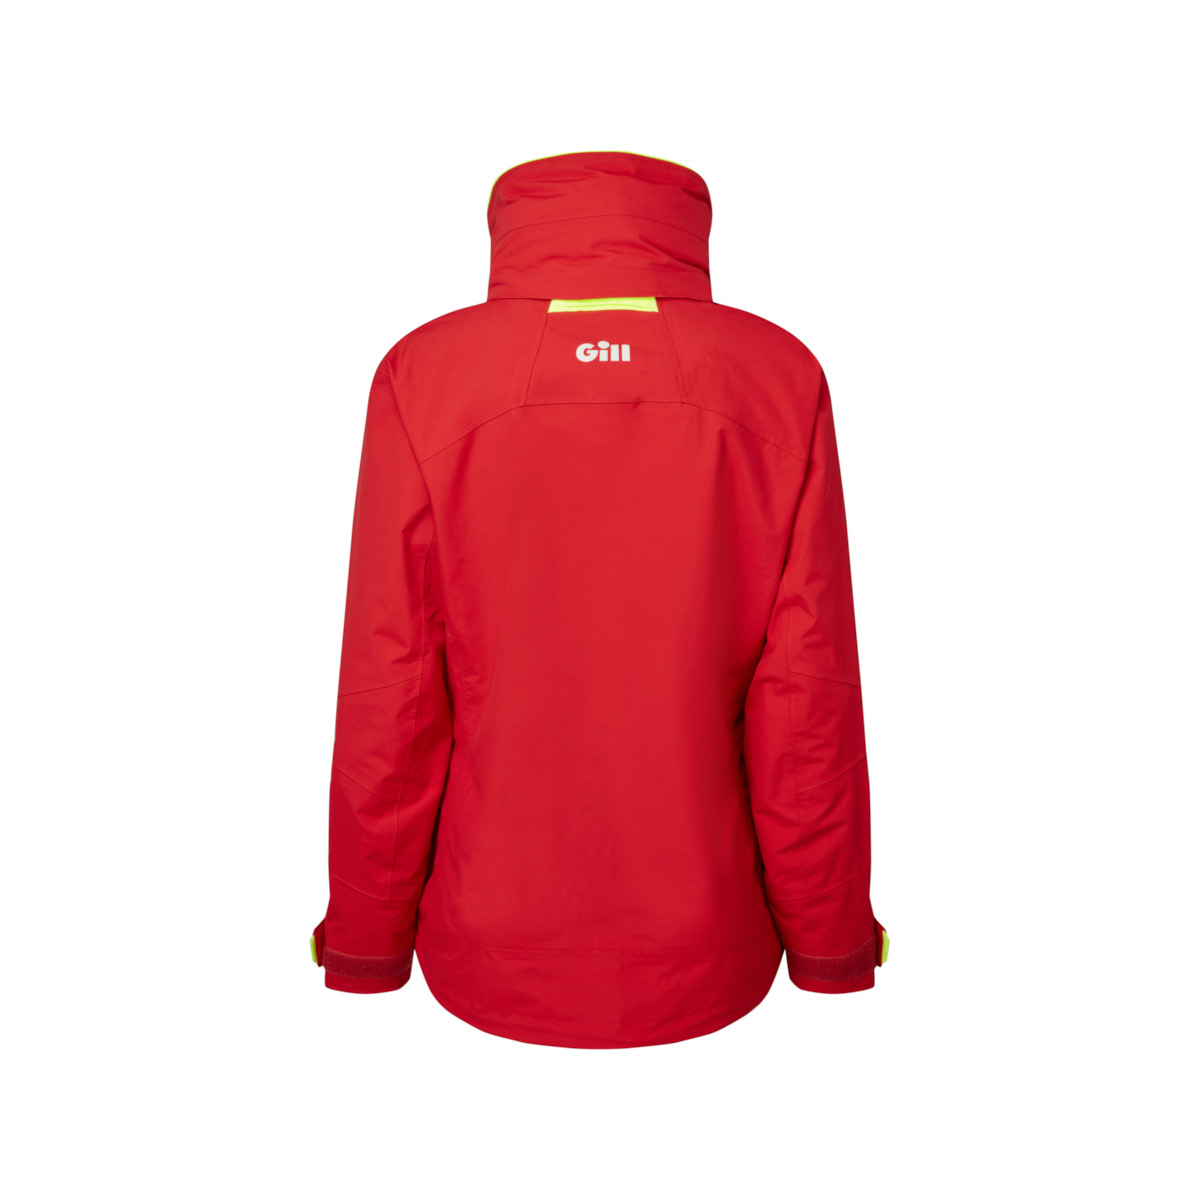 Gill OS32 veste de voile Coastal femme rouge, taille 8